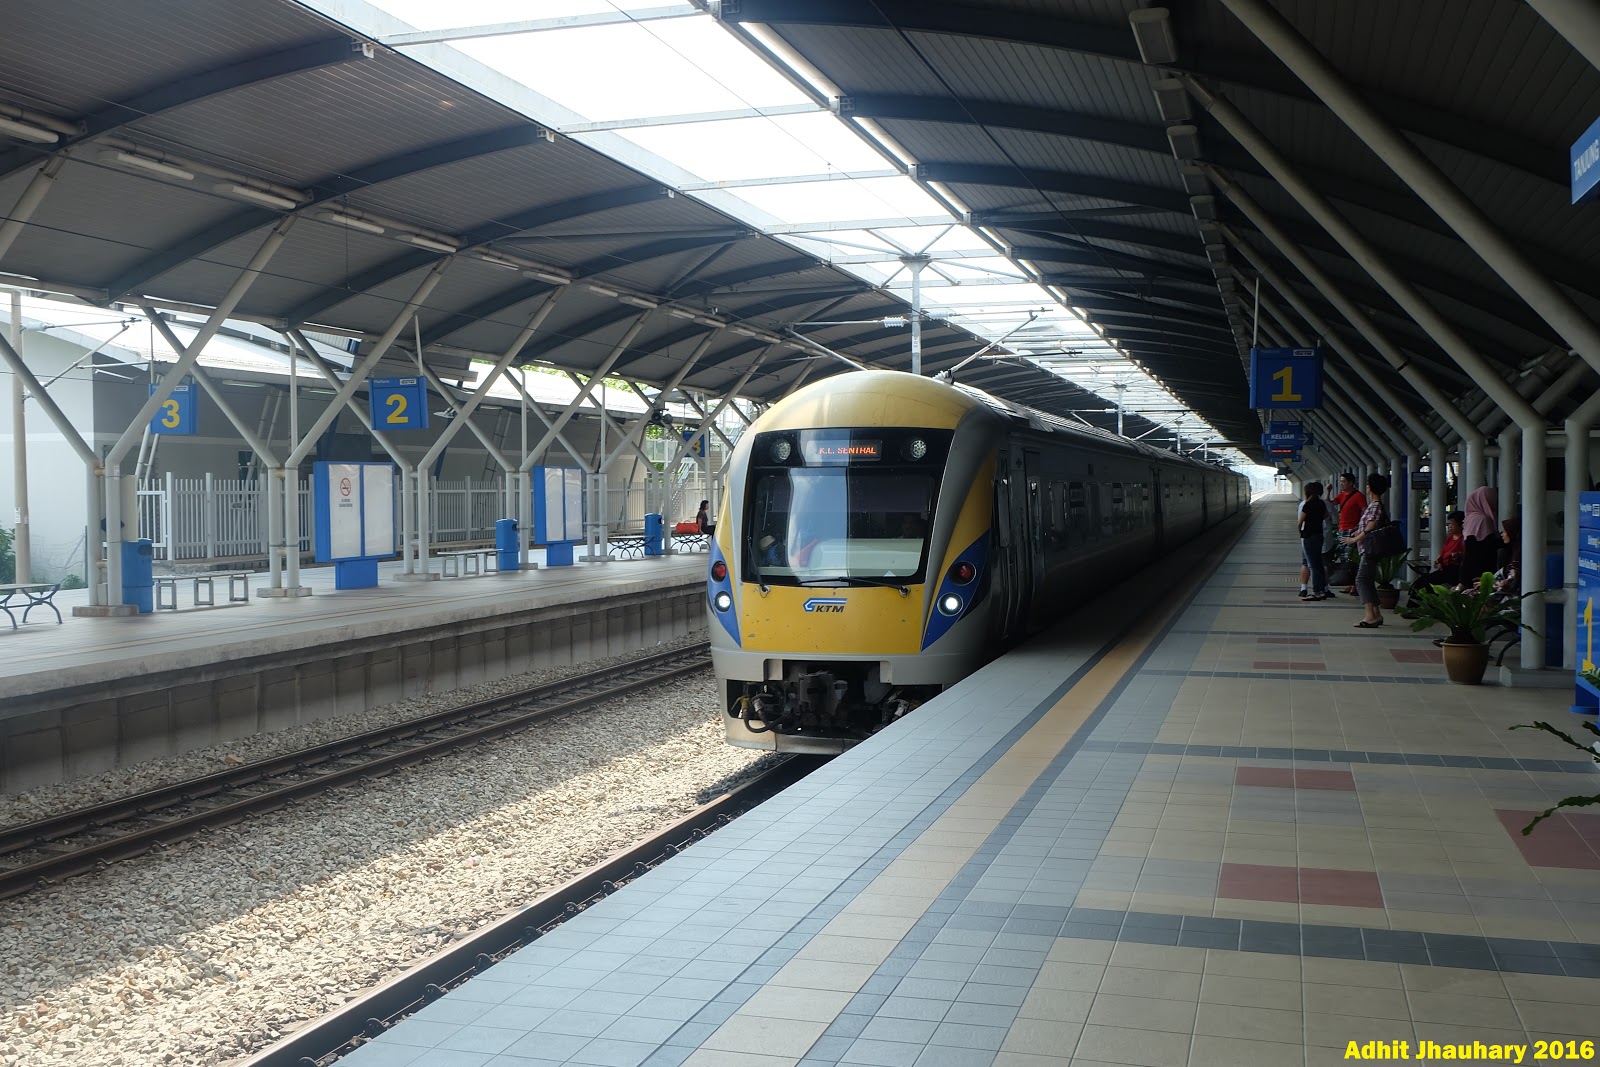 Menikmati Kereta  Api  ETS Electric Train Service di Malaysia 